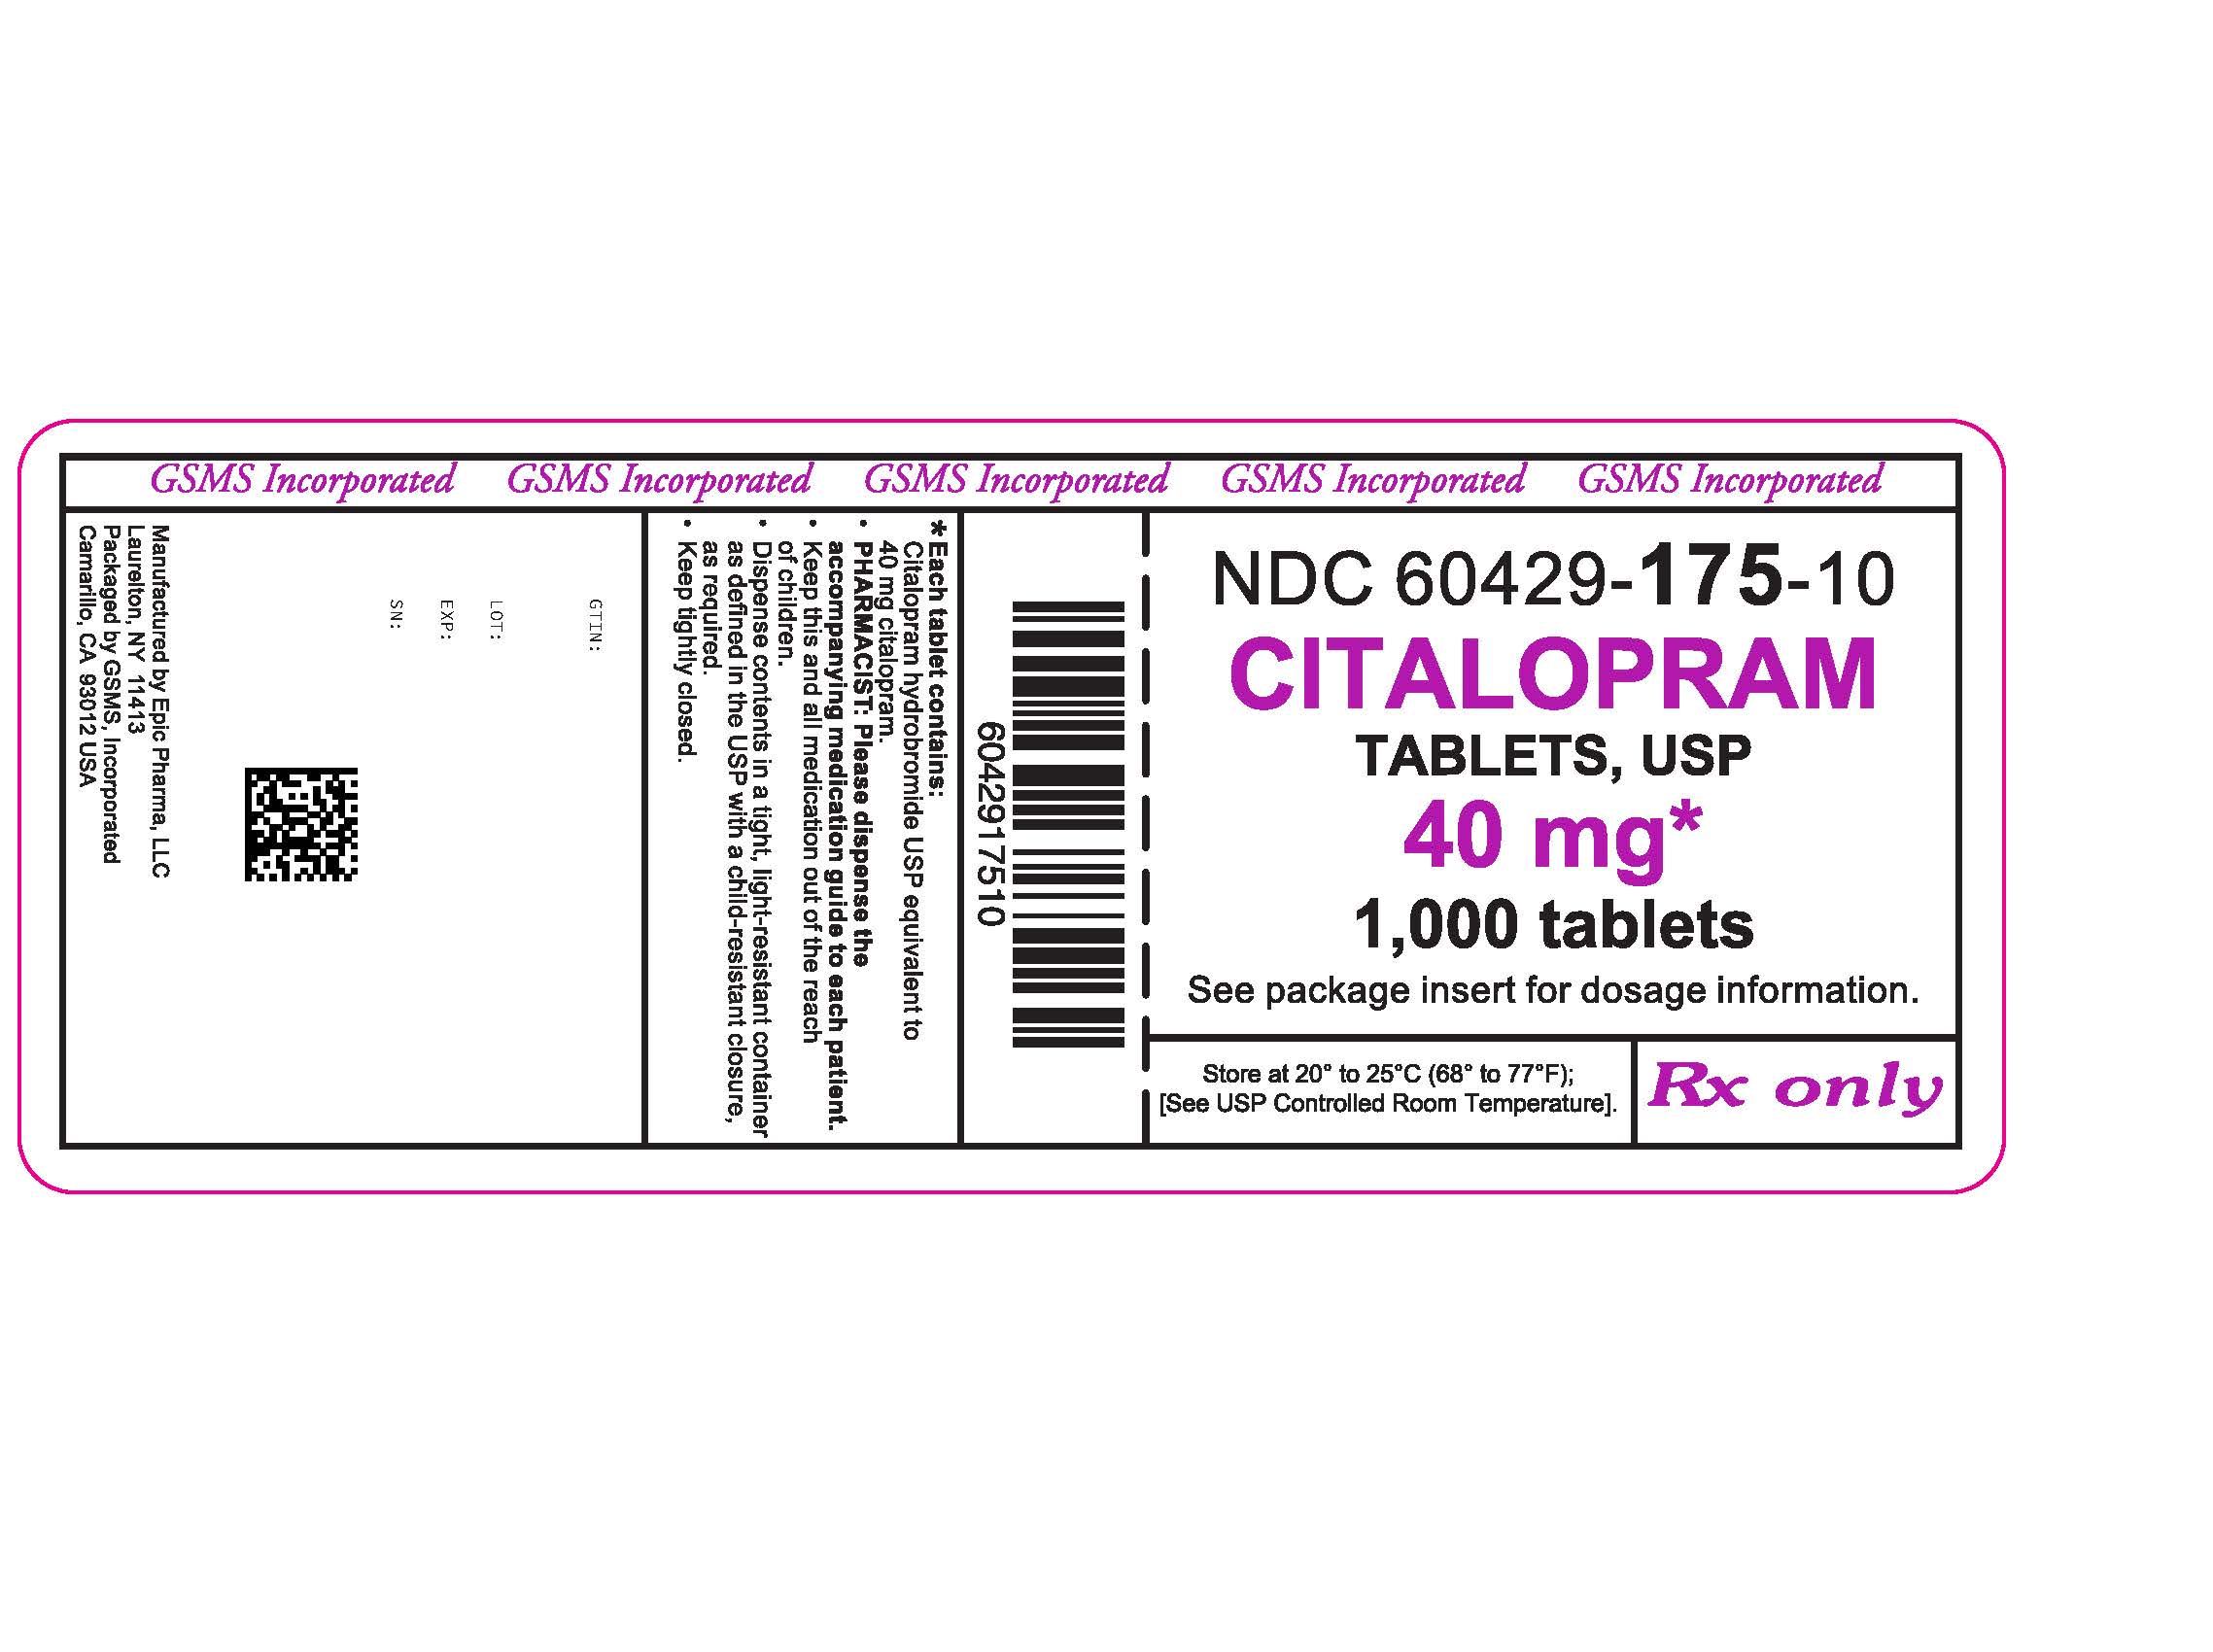 ndc-60429-174-citalopram-images-packaging-labeling-appearance